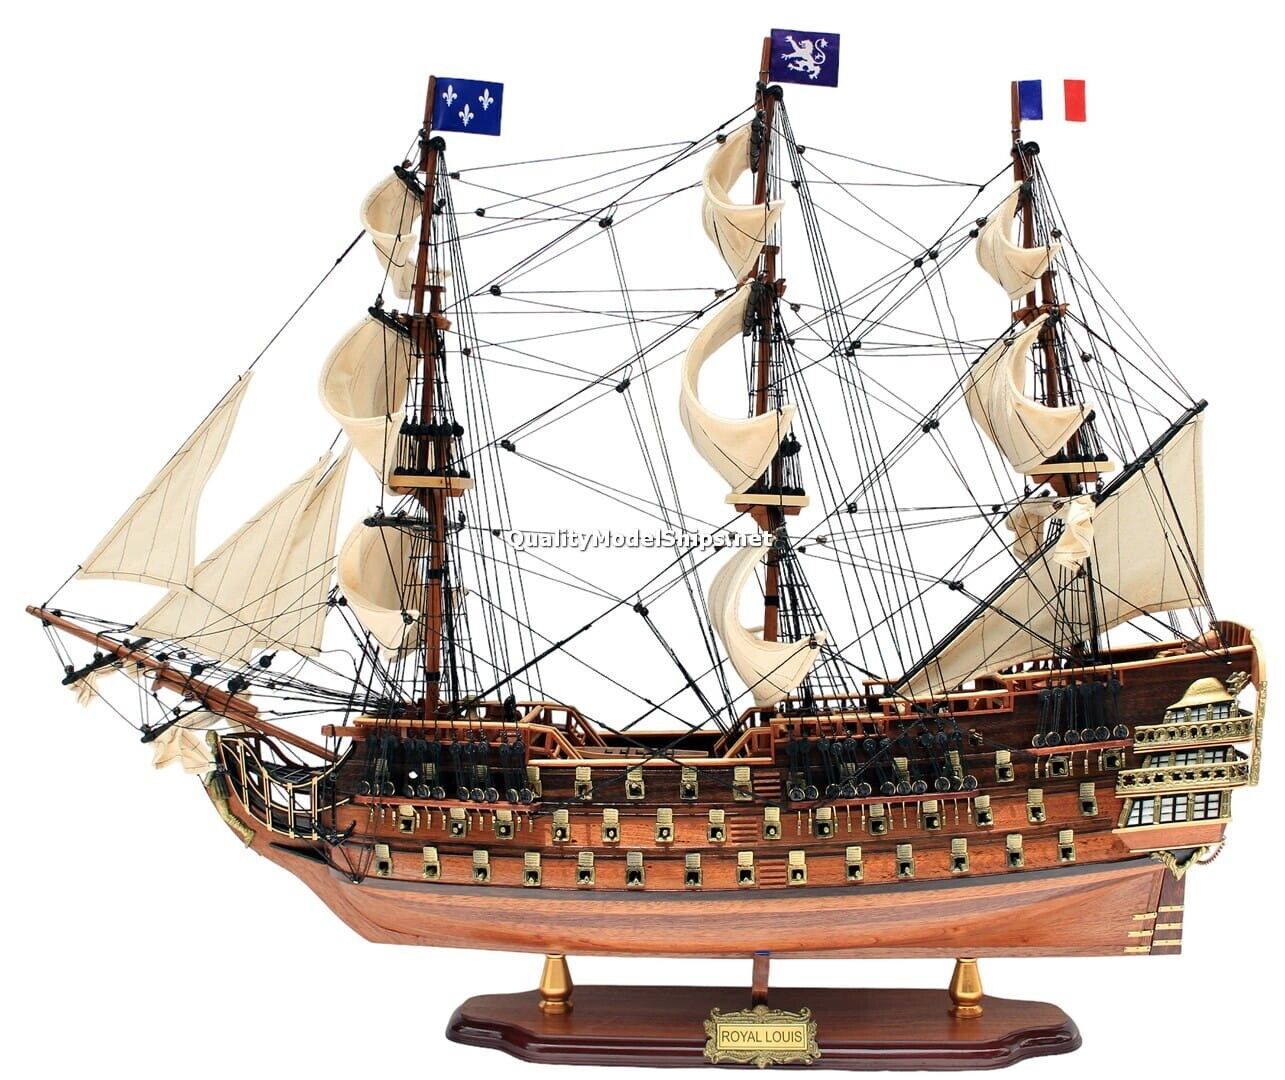 Royal Louis Display Wooden Ship Model